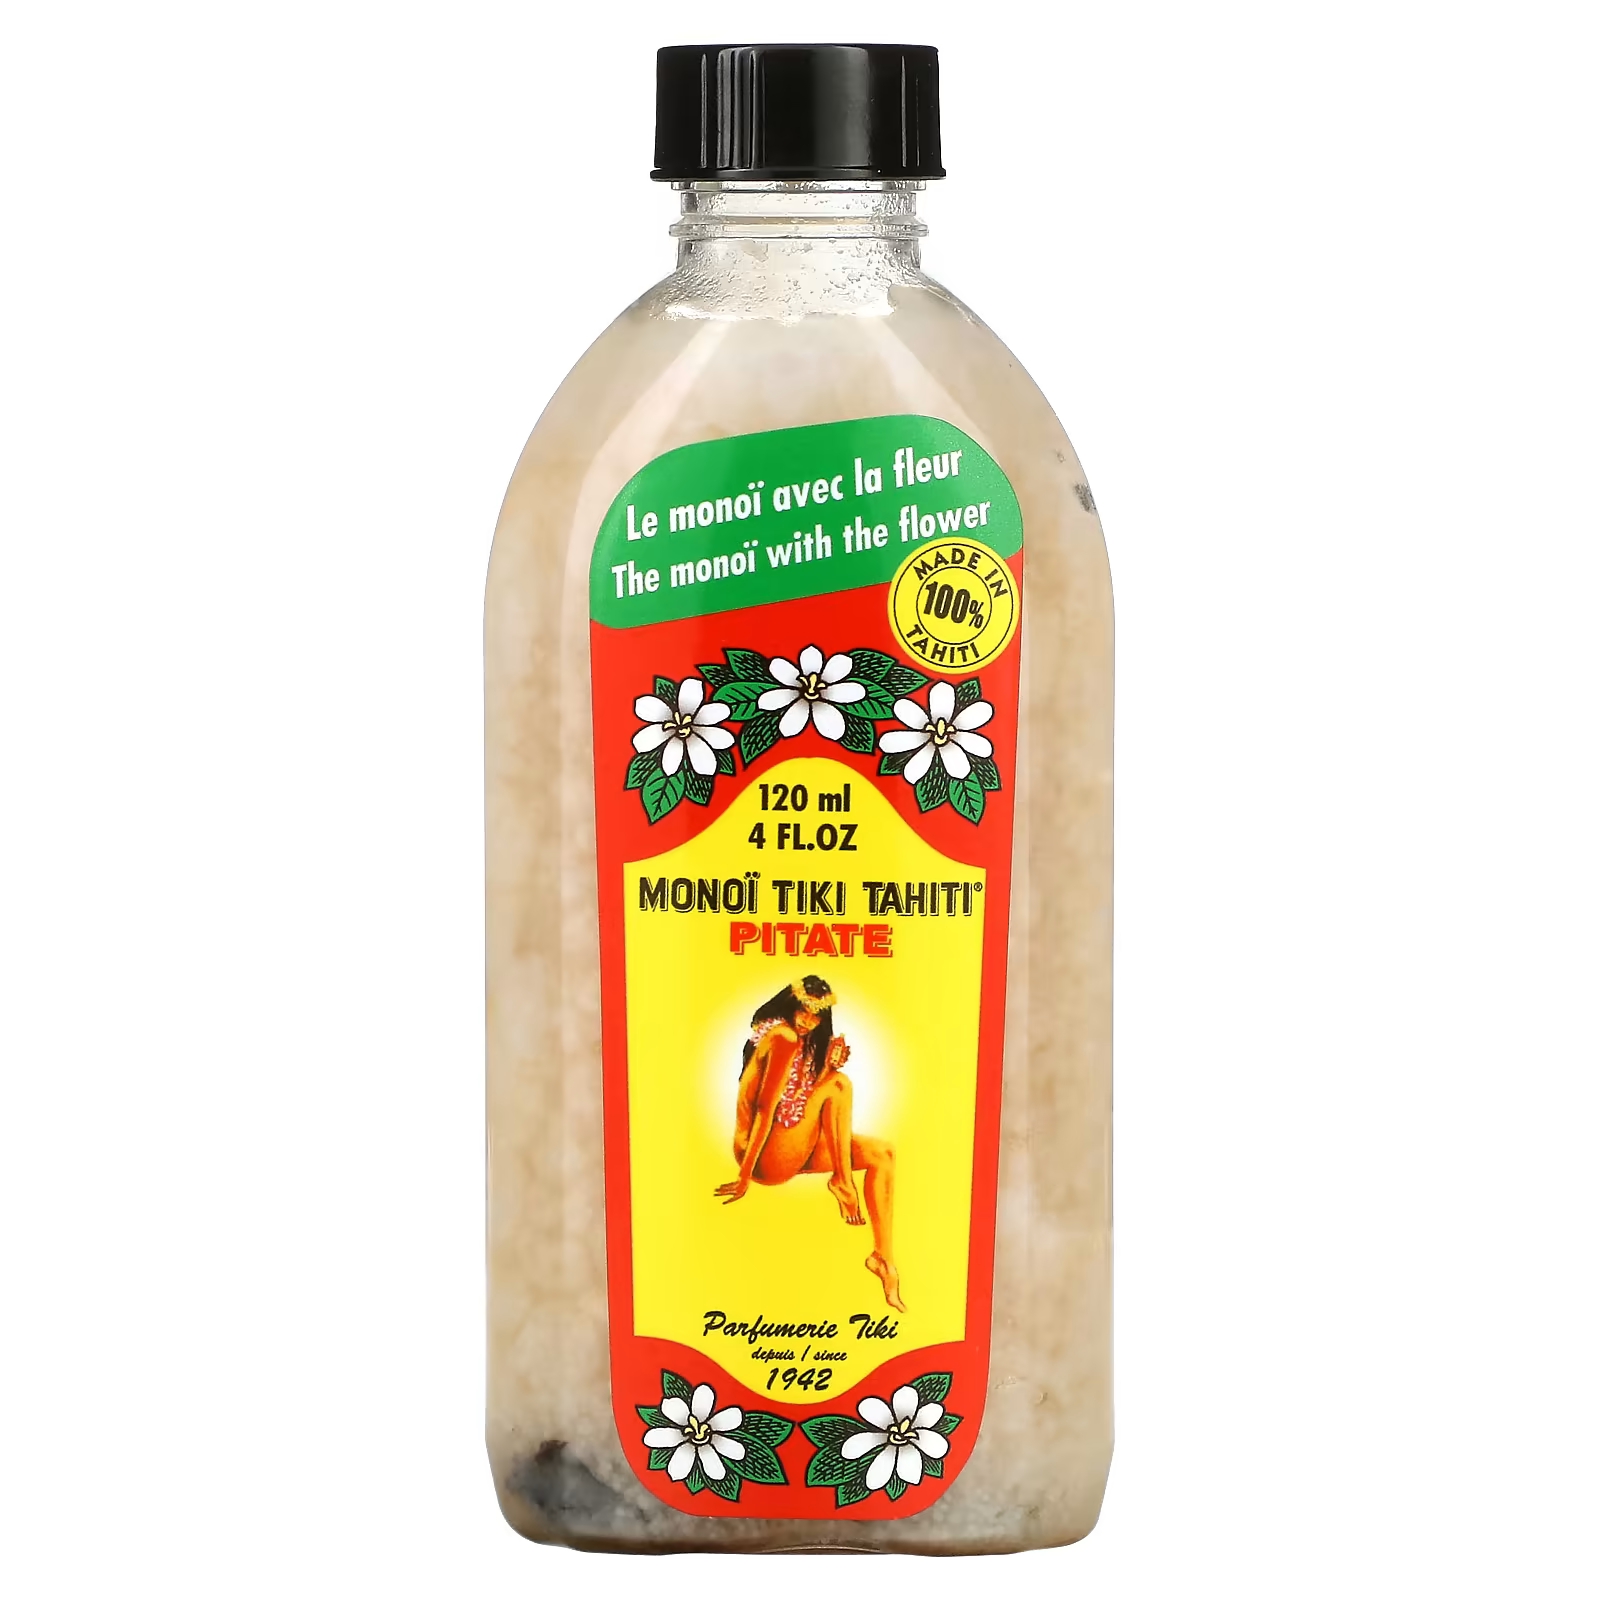 Кокосового масла Monoi Tiare Tahiti увлажняет кожу, 120 мл